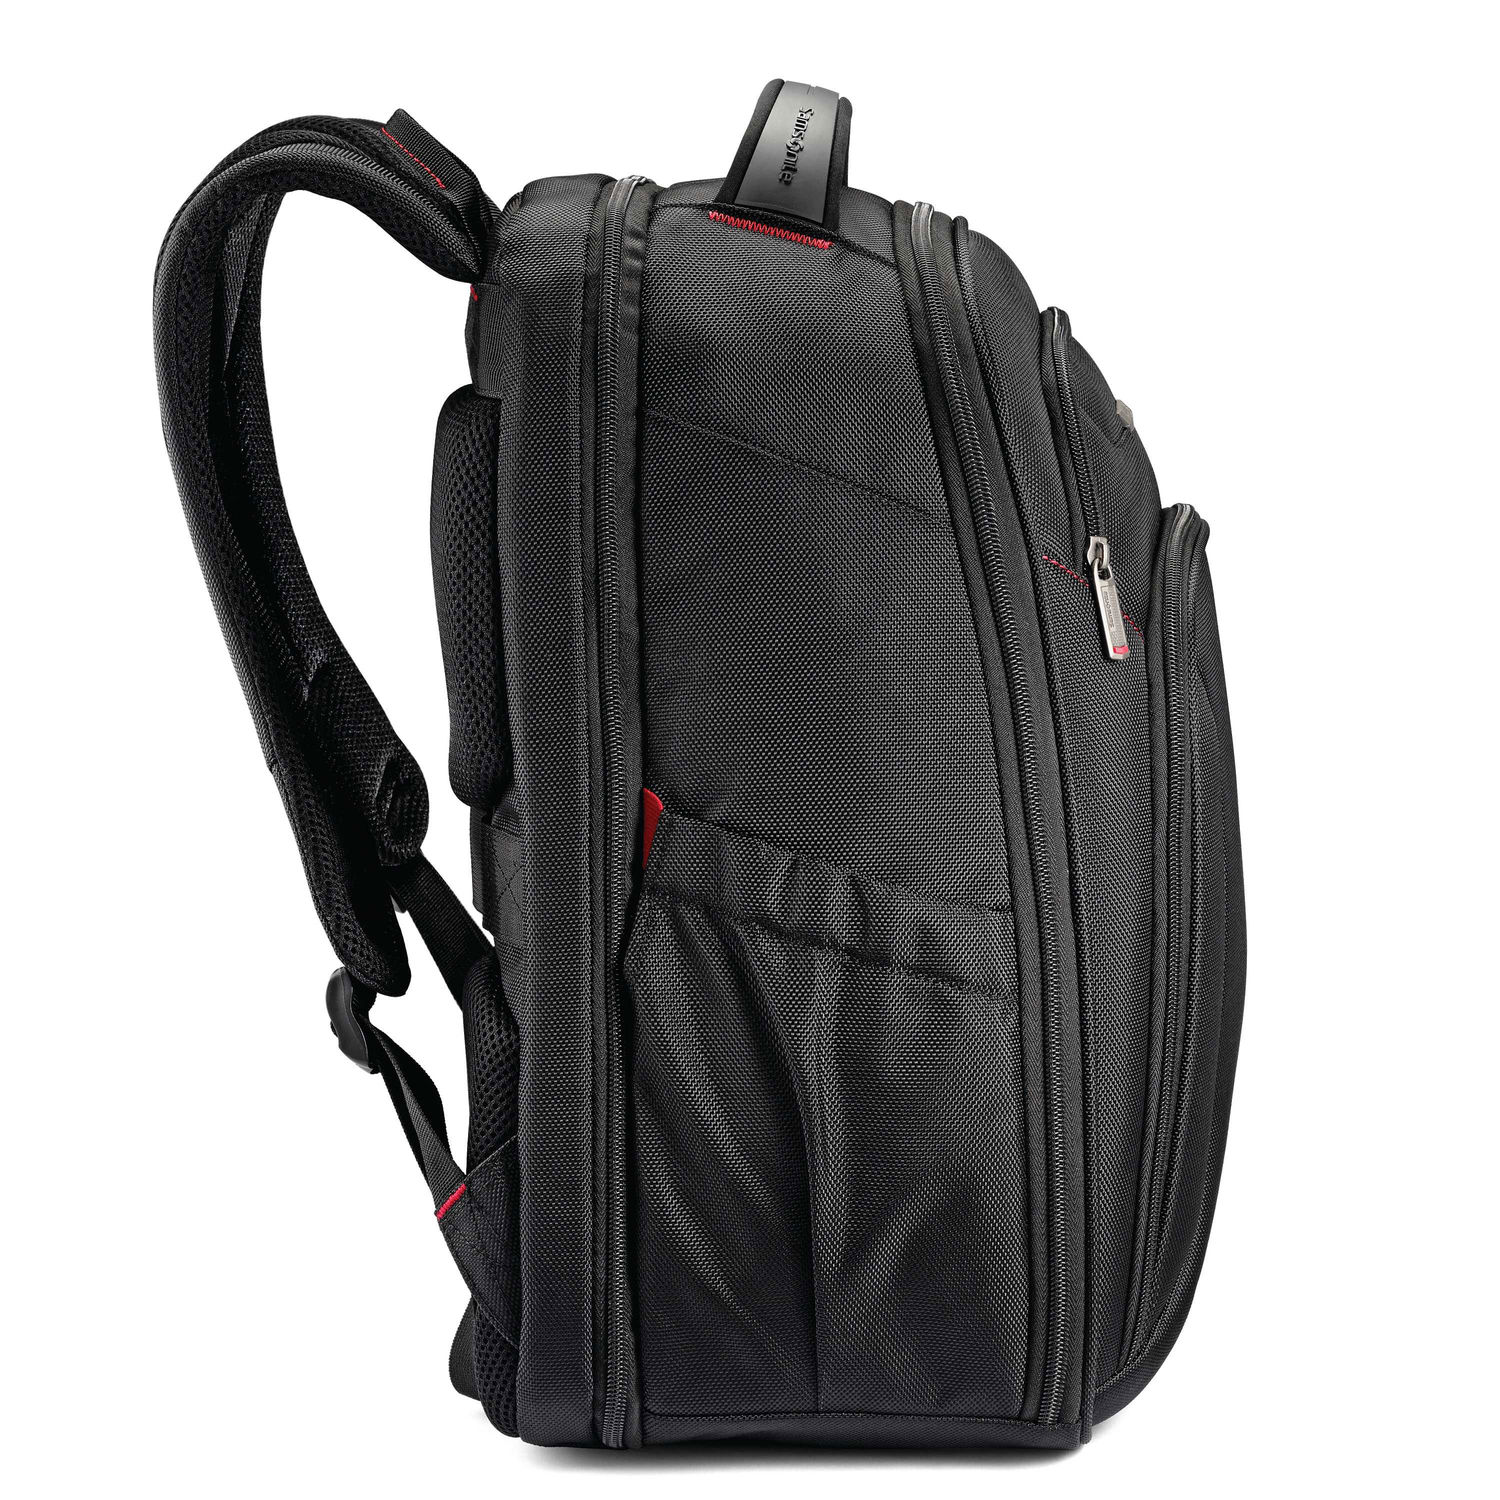  Samsonite Xenon  3 0 Large Laptop Backpack Black Irv s 